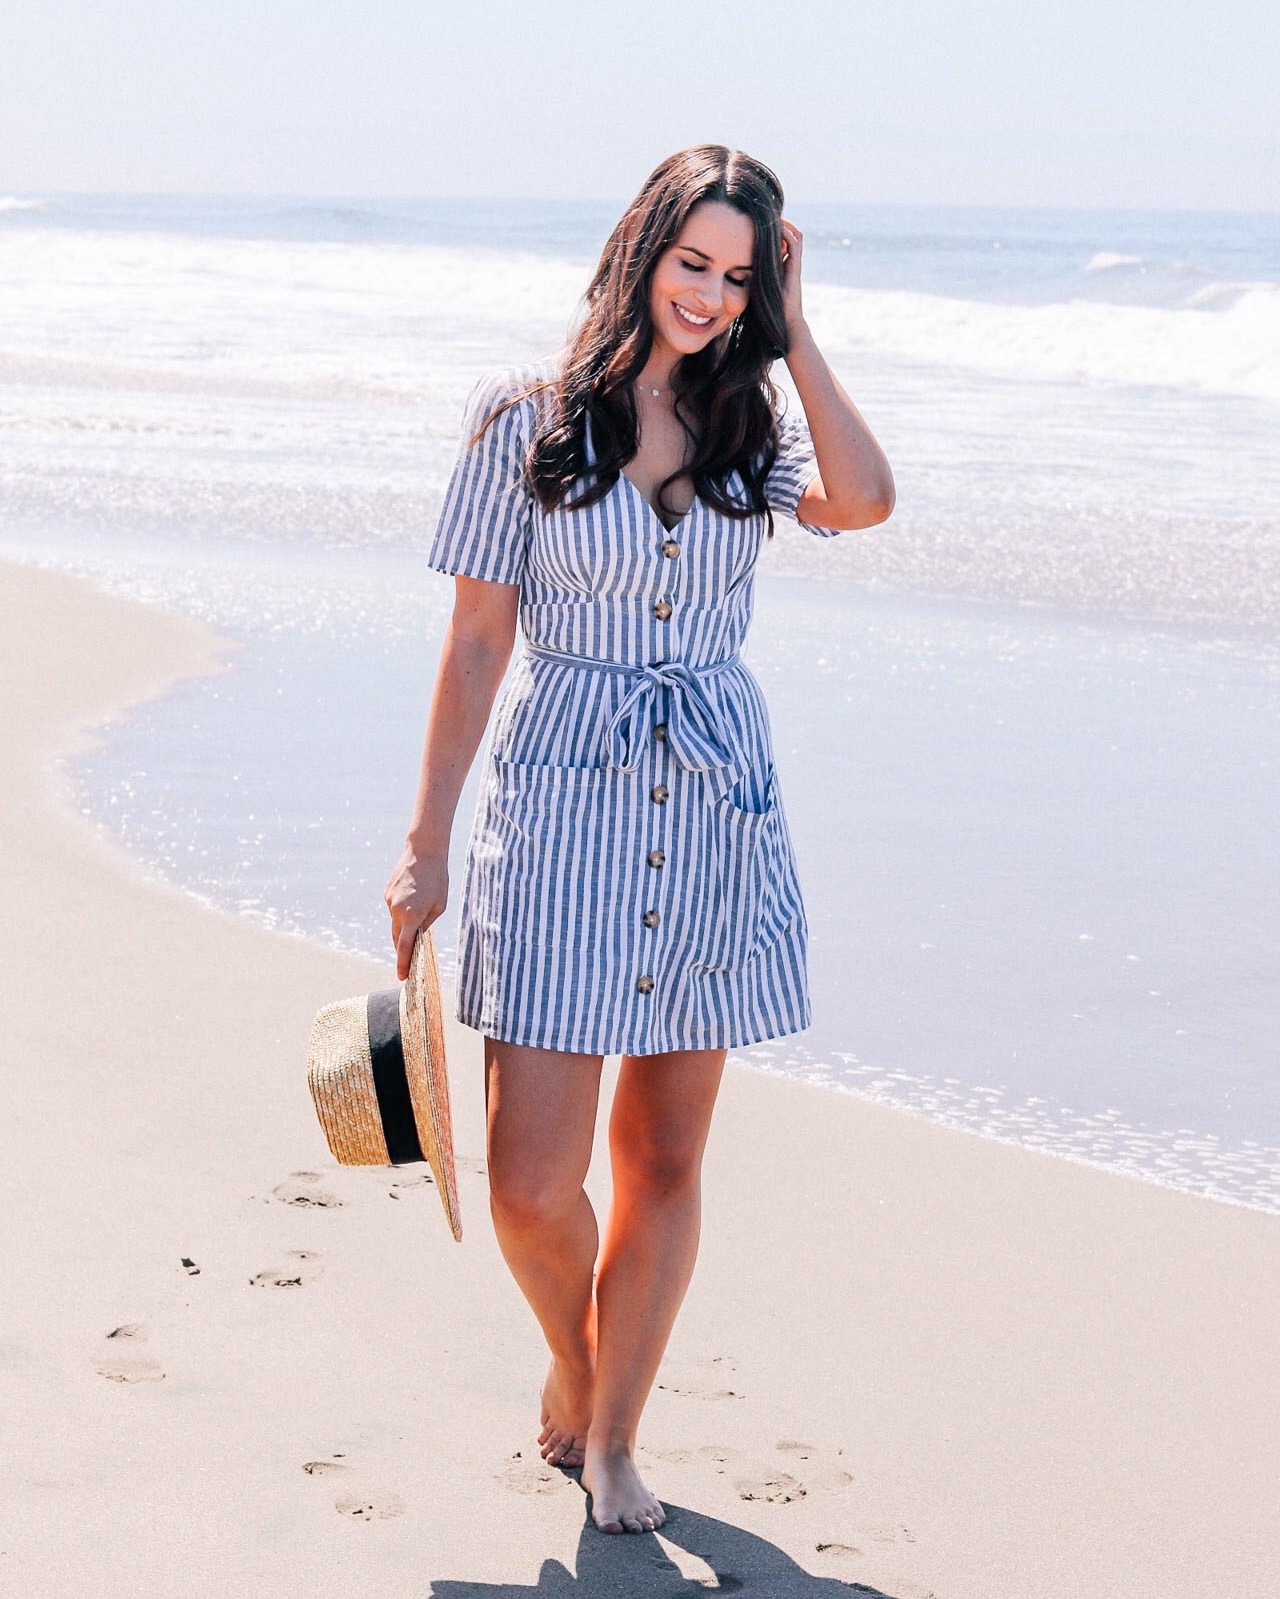 Blue Striped Dress for Summer